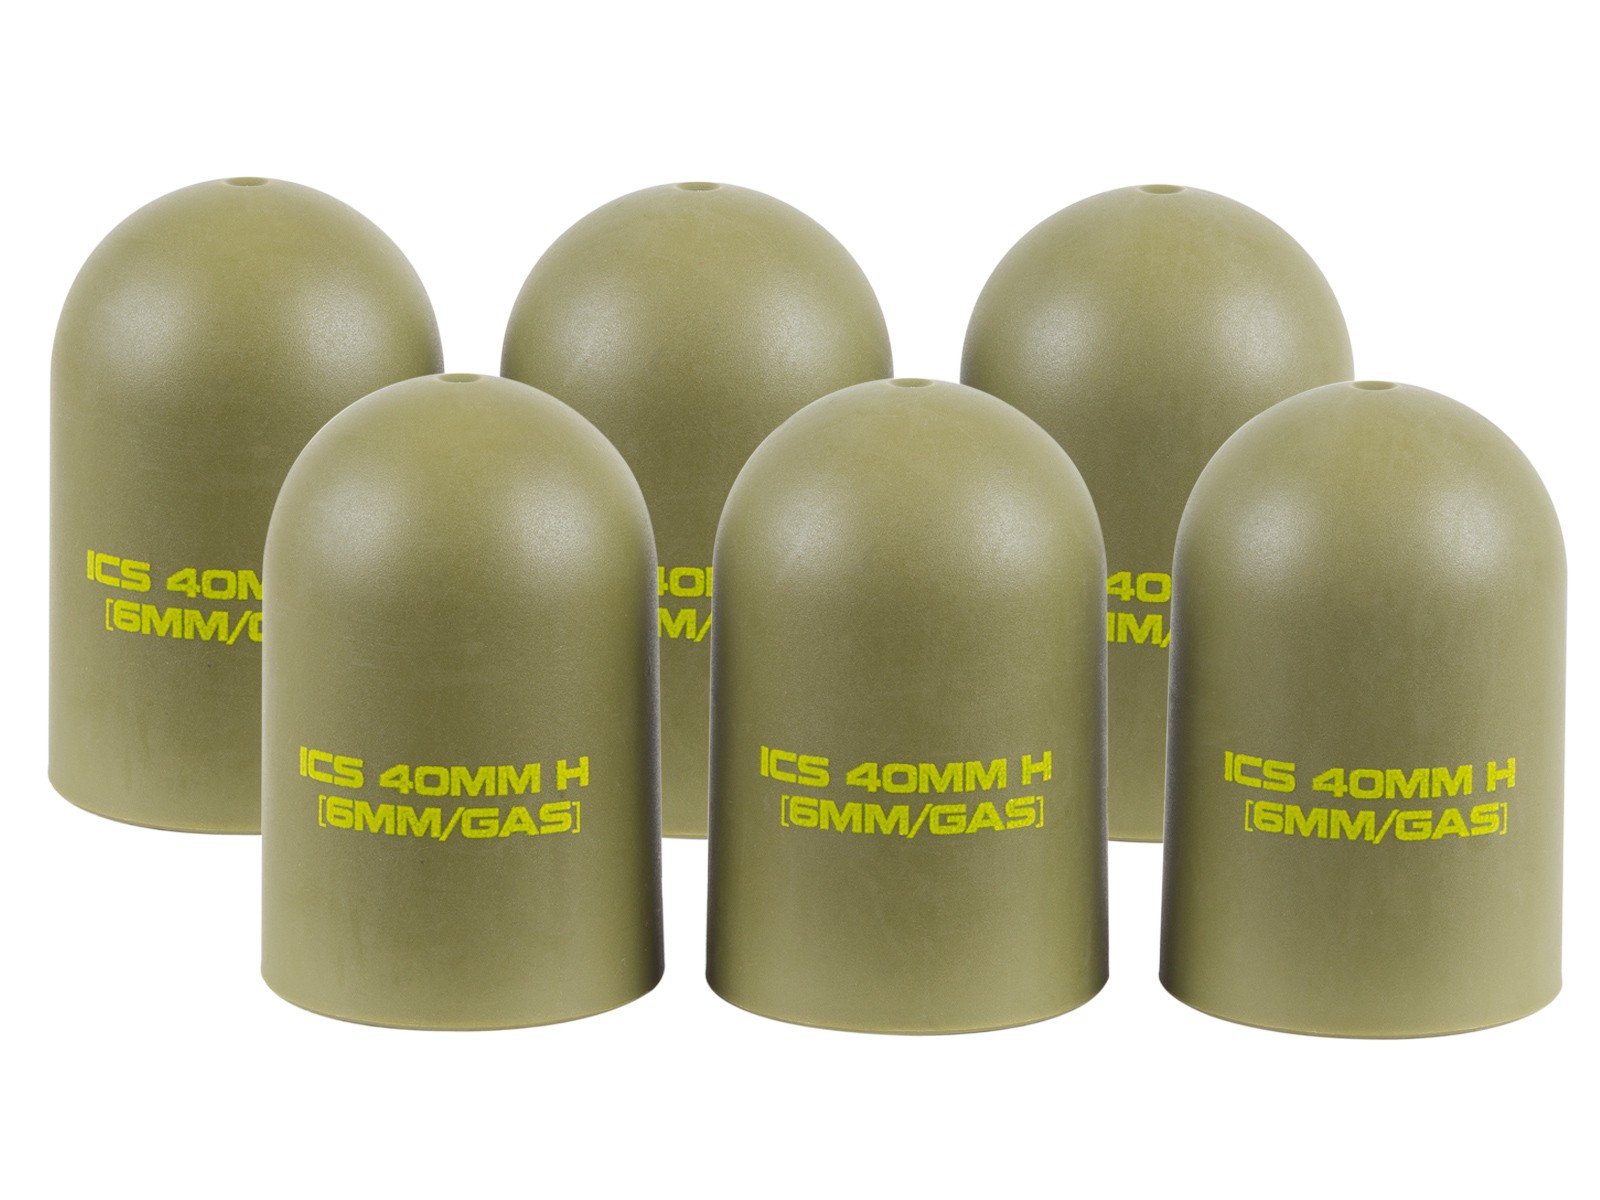 ICS MA-166, Light Weight Grenade Shell Caps